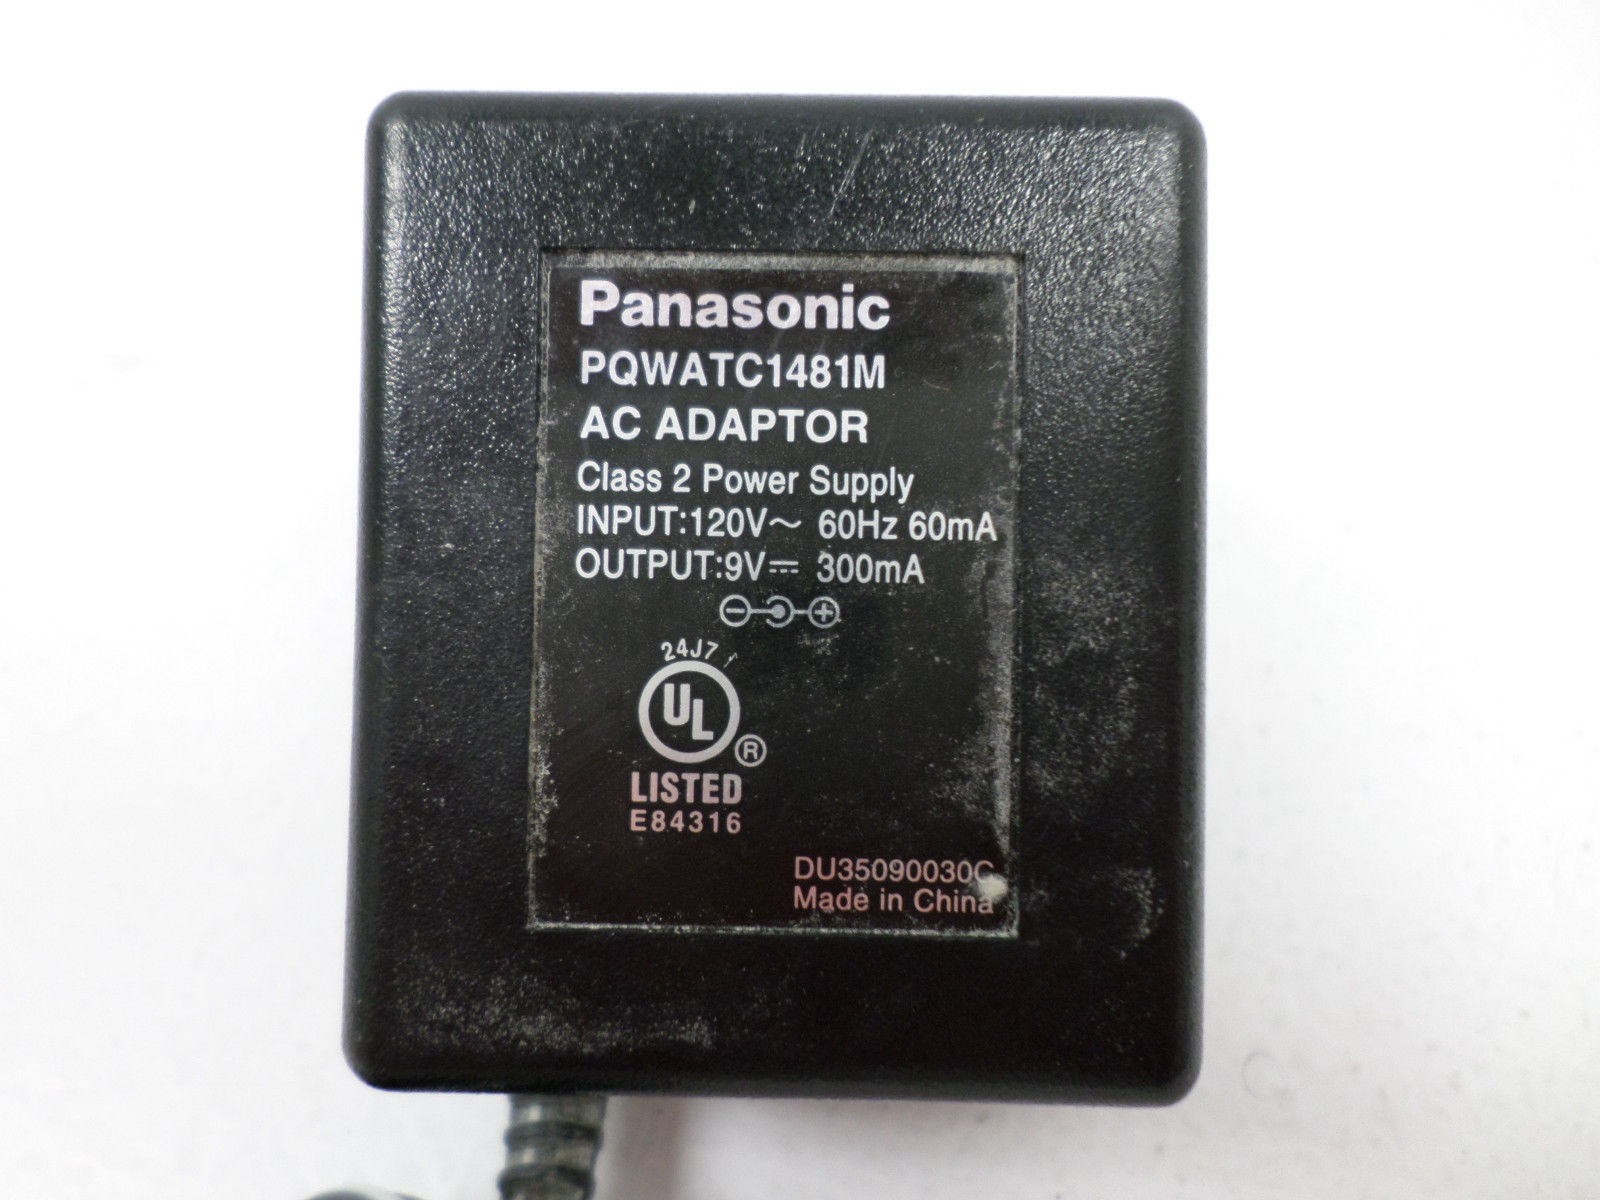 New 9V 300mA Panasonic AC ADAPTER PQWATC1481M Power Supply